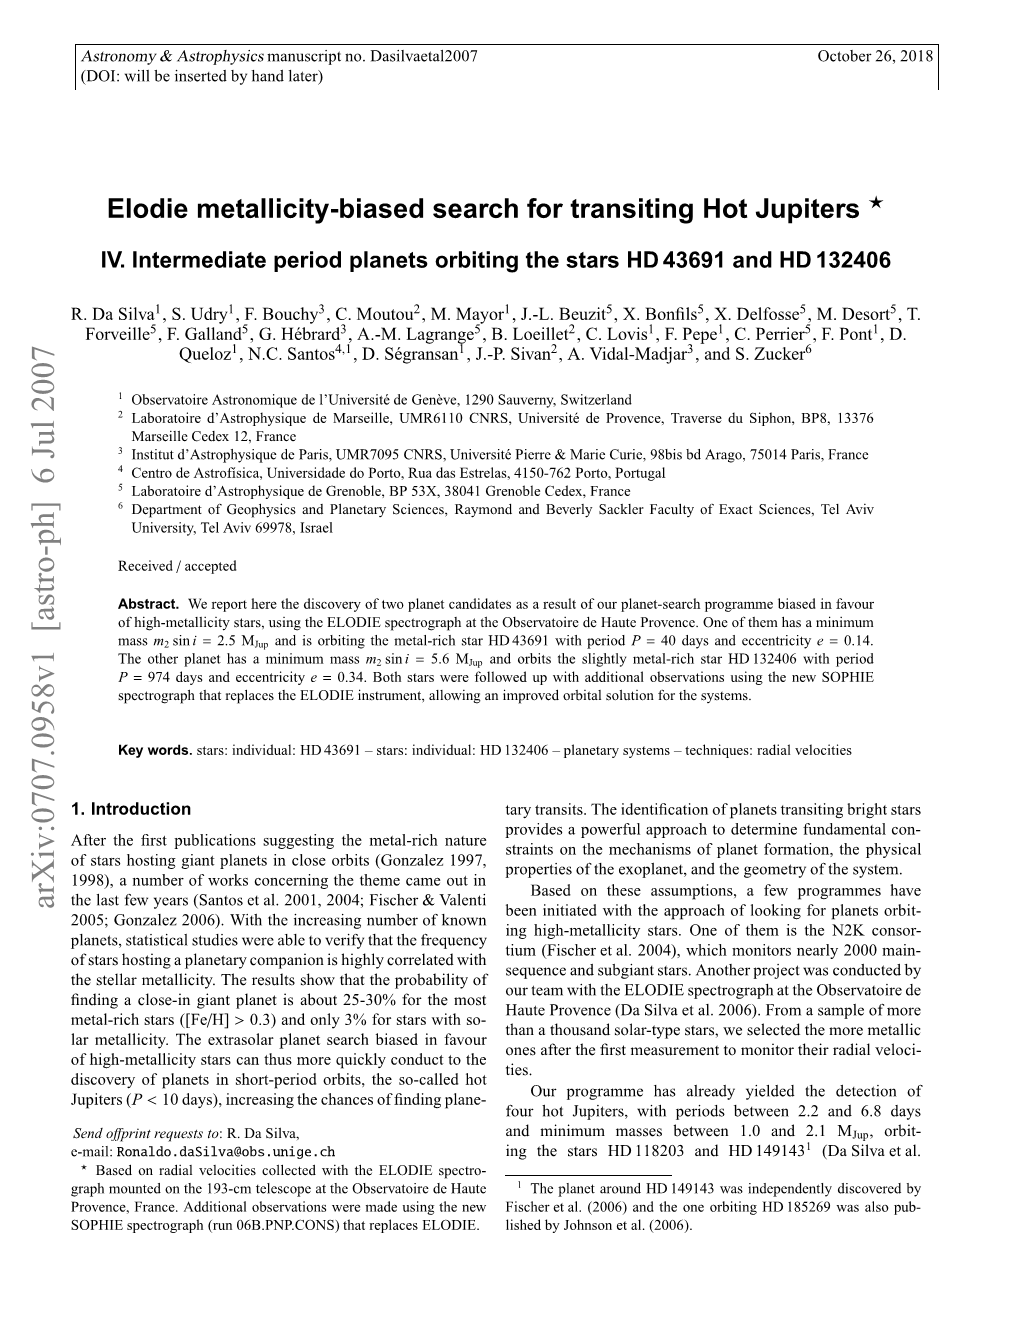 Elodie Metallicity-Biased Search for Transiting Hot Jupiters IV